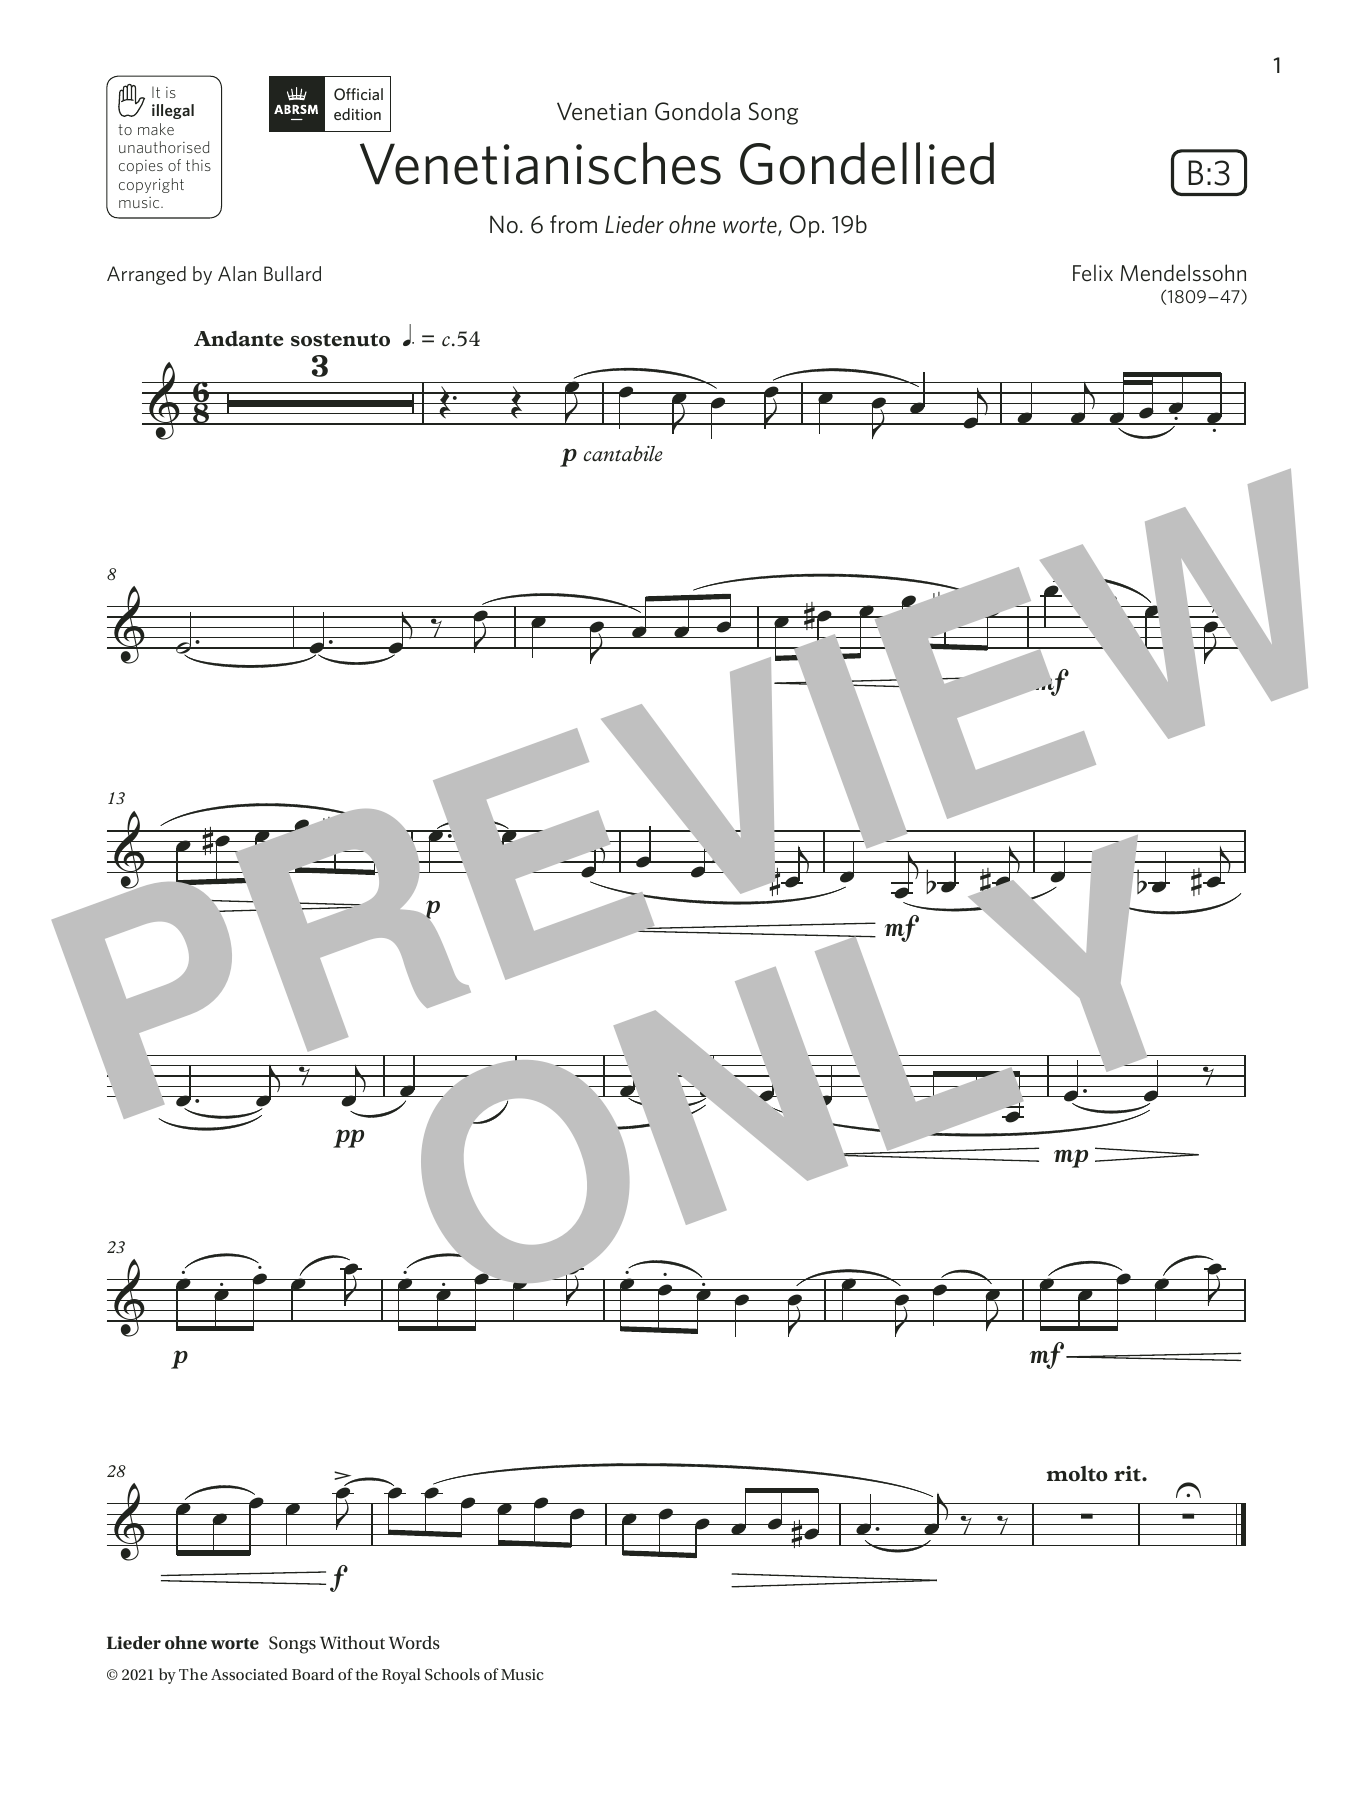 Download Felix Mendelssohn Venetianisches Gondellied (Grade 3 List Sheet Music